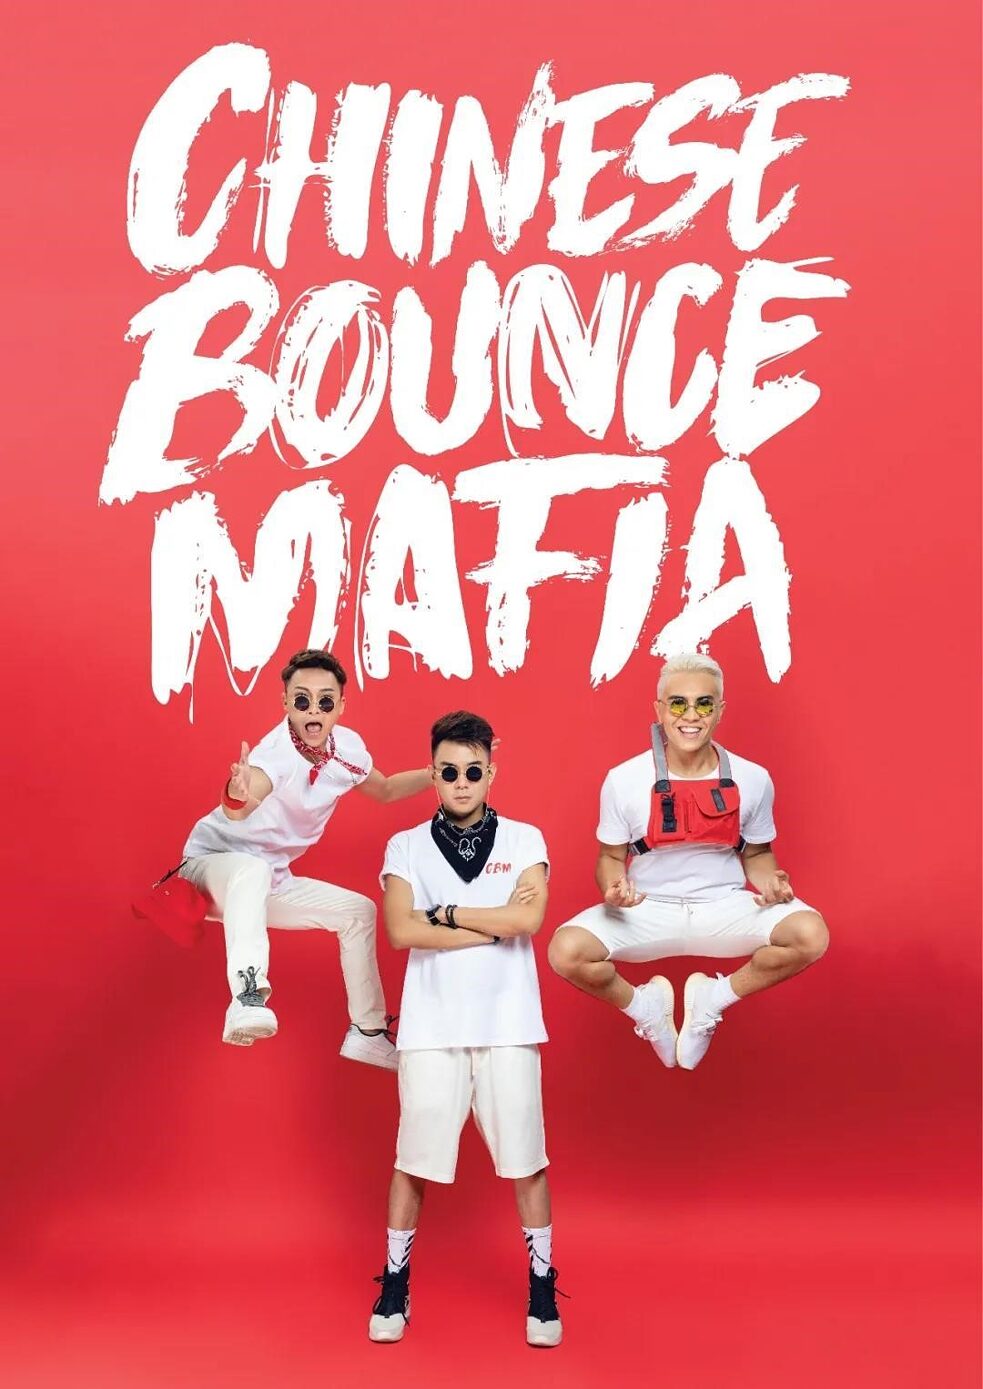 Die Chinese Bounce Mafia: Carta, Luminn, Unity